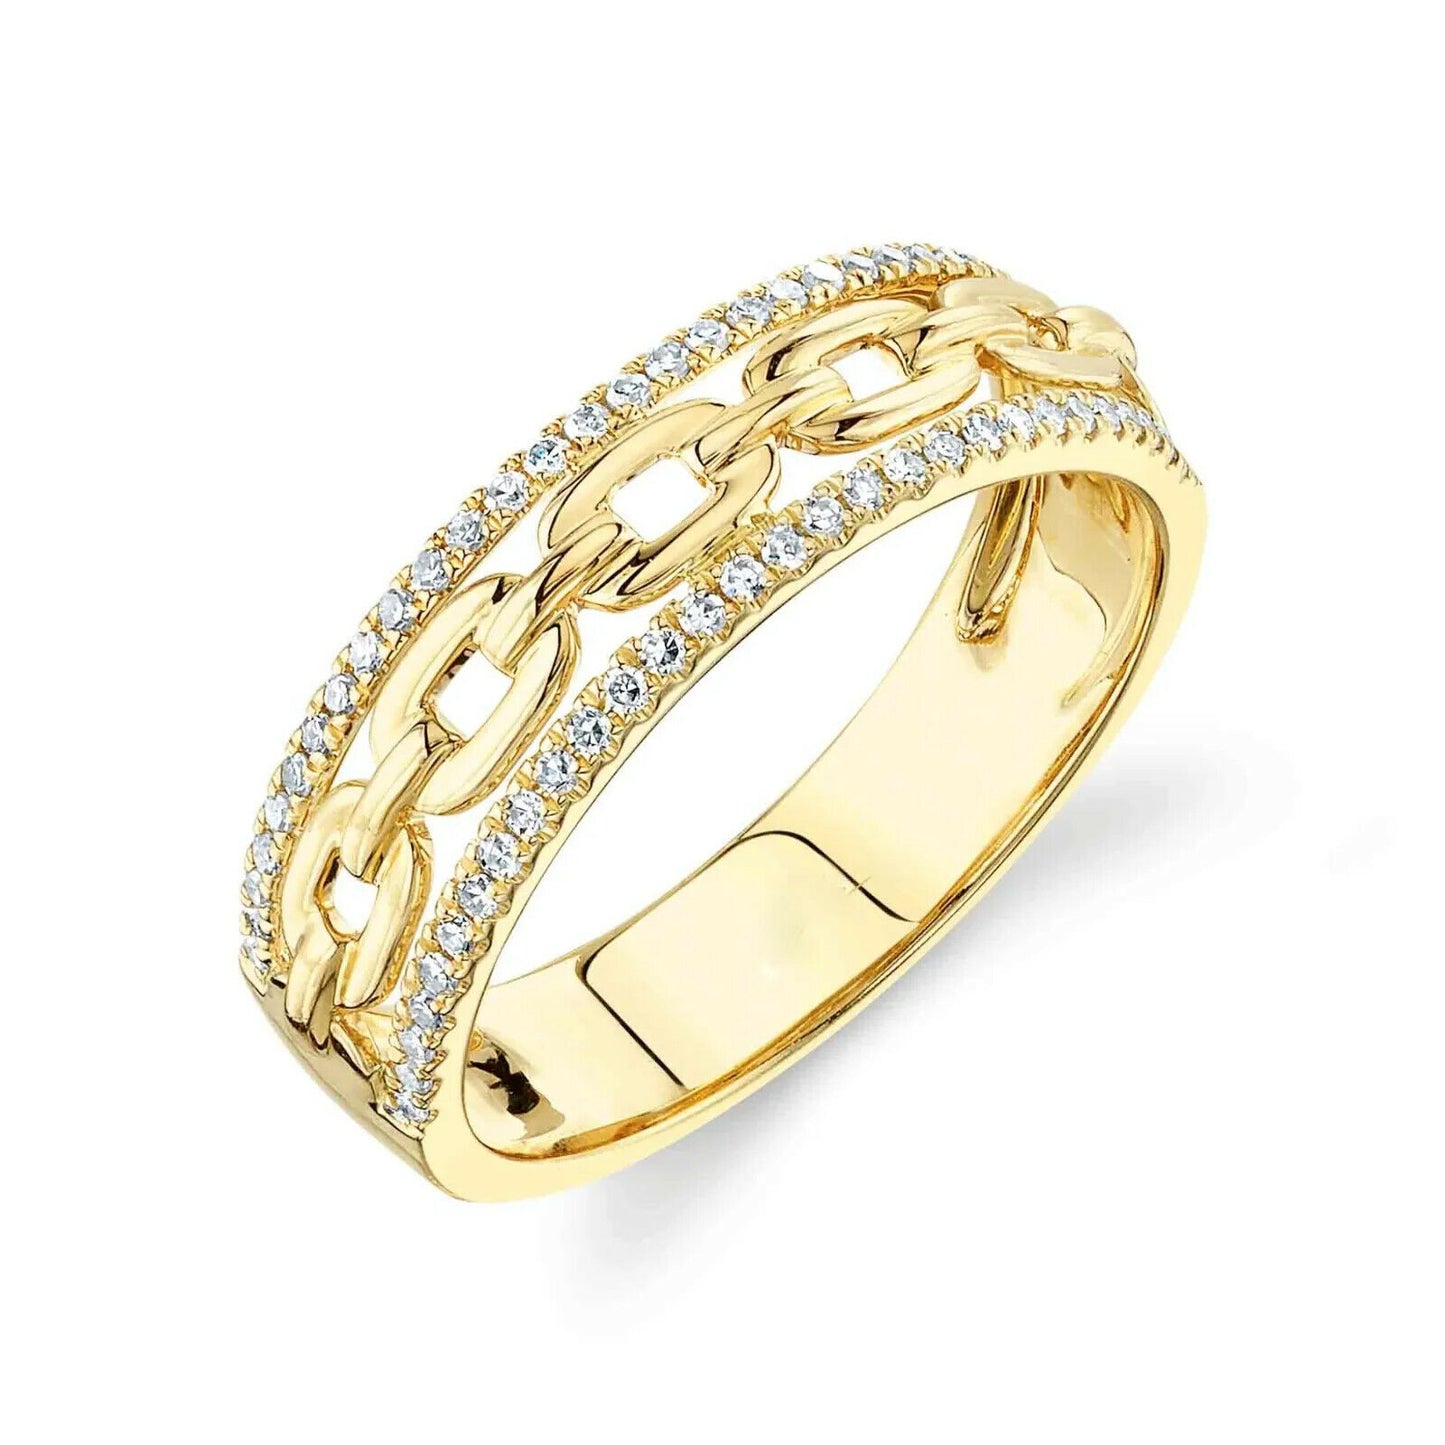 14K Gold 0.19 CT Chain Link Diamond Ring Band Women's Wedding Anniversary Fashion